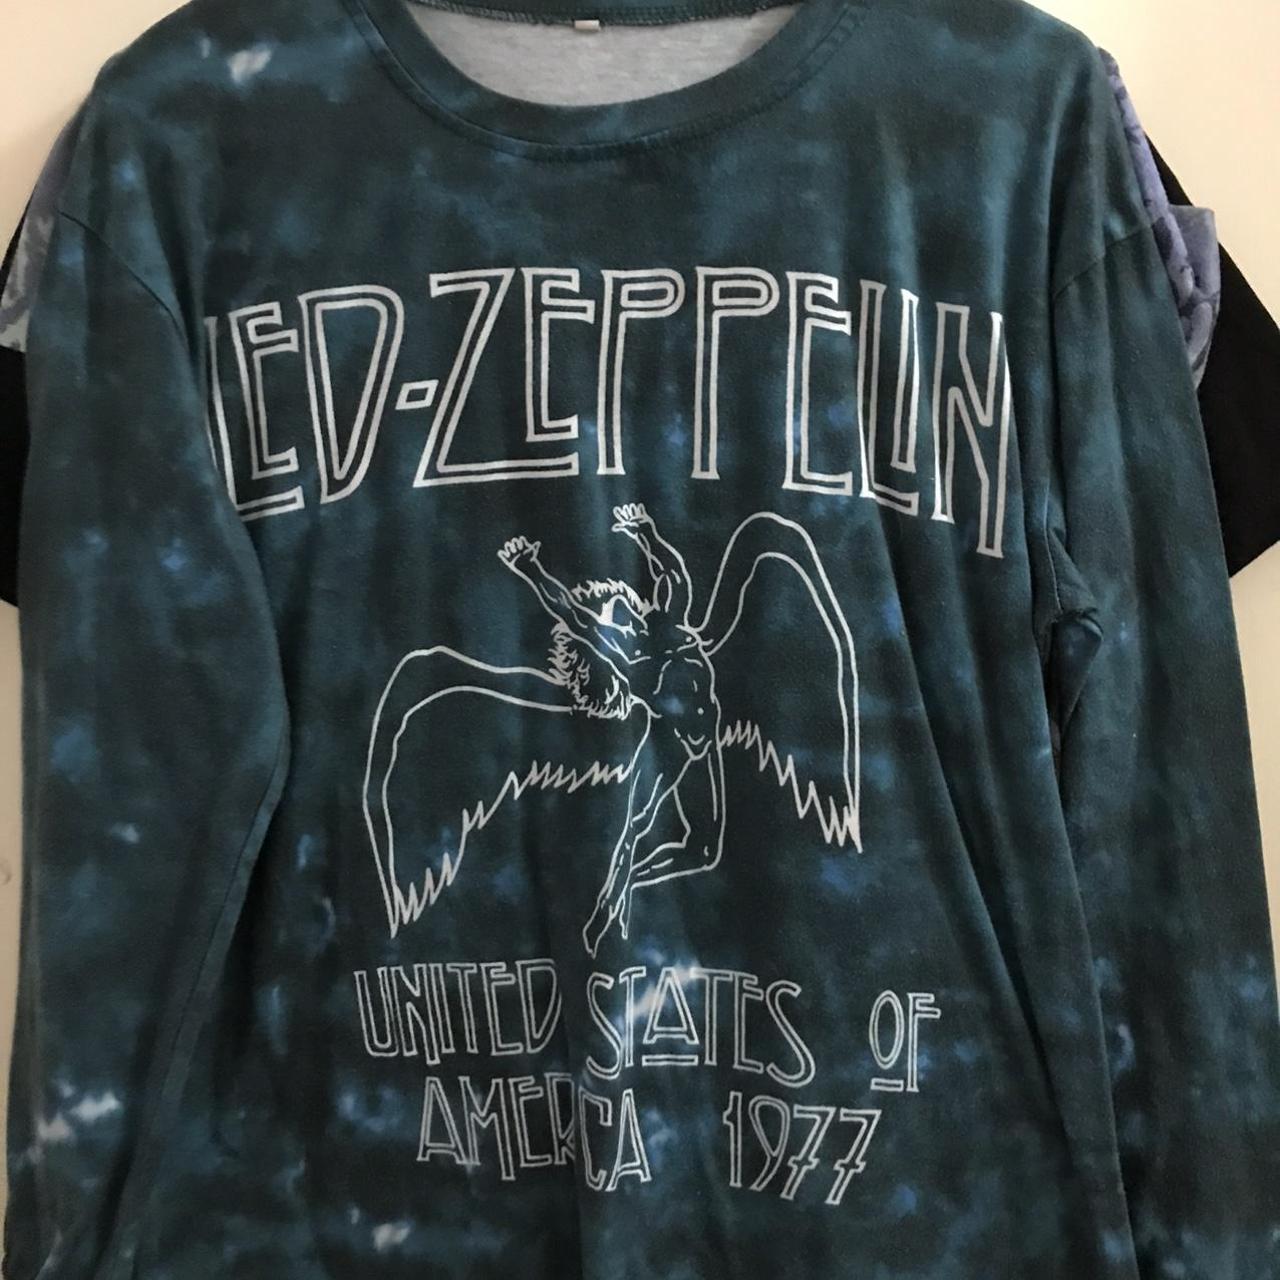 Led zeppelin long sleeve shirt #ledzepplin #grunge - Depop